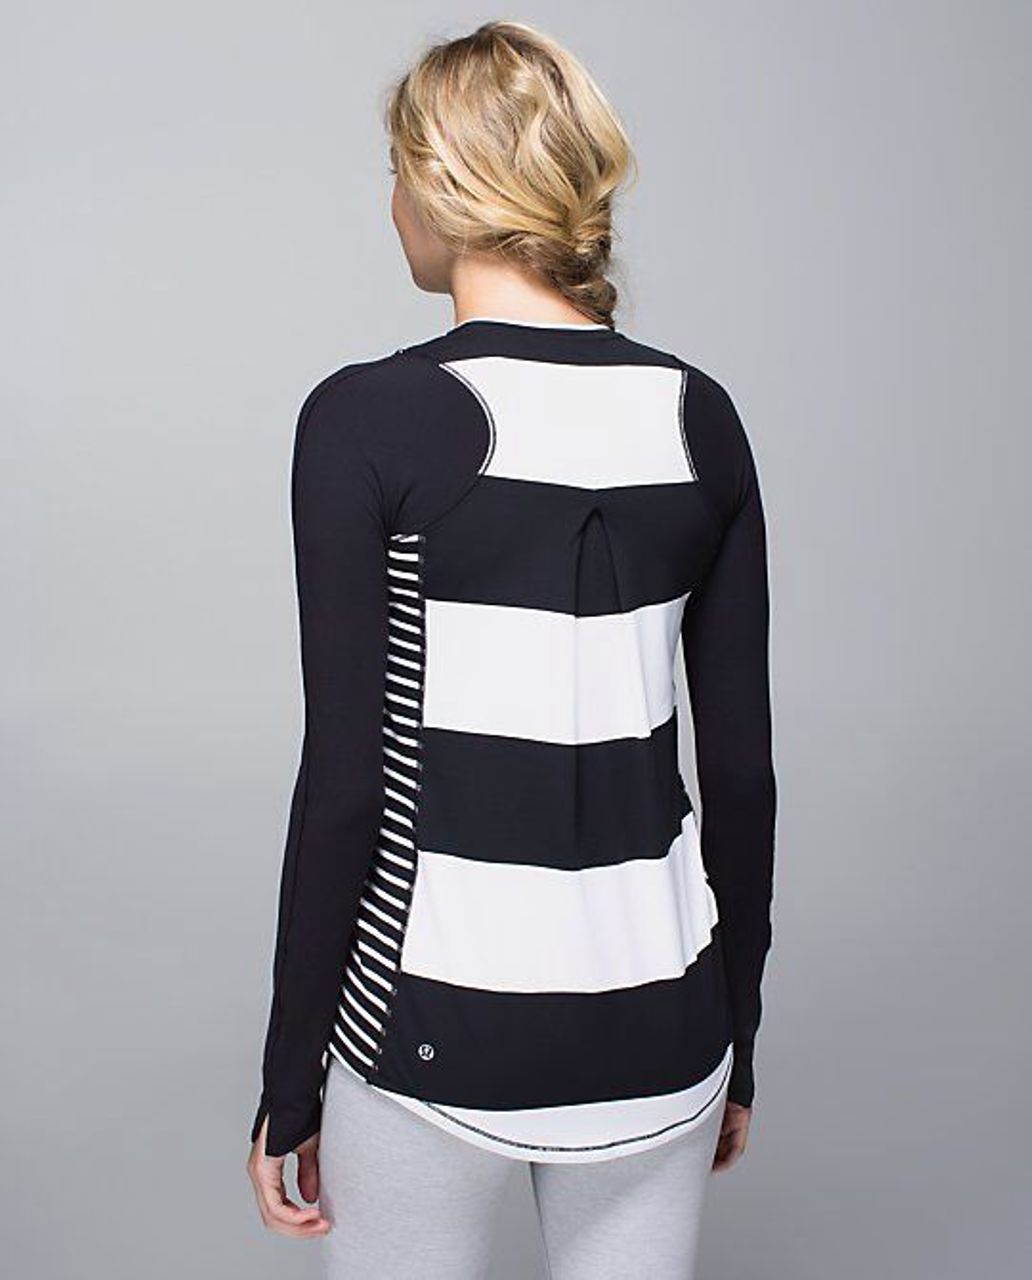 Lululemon Tuck and Flow Long Sleeve - 2014 Seawheeze - Deenie Stripe White Black / Bold Stripe White Black